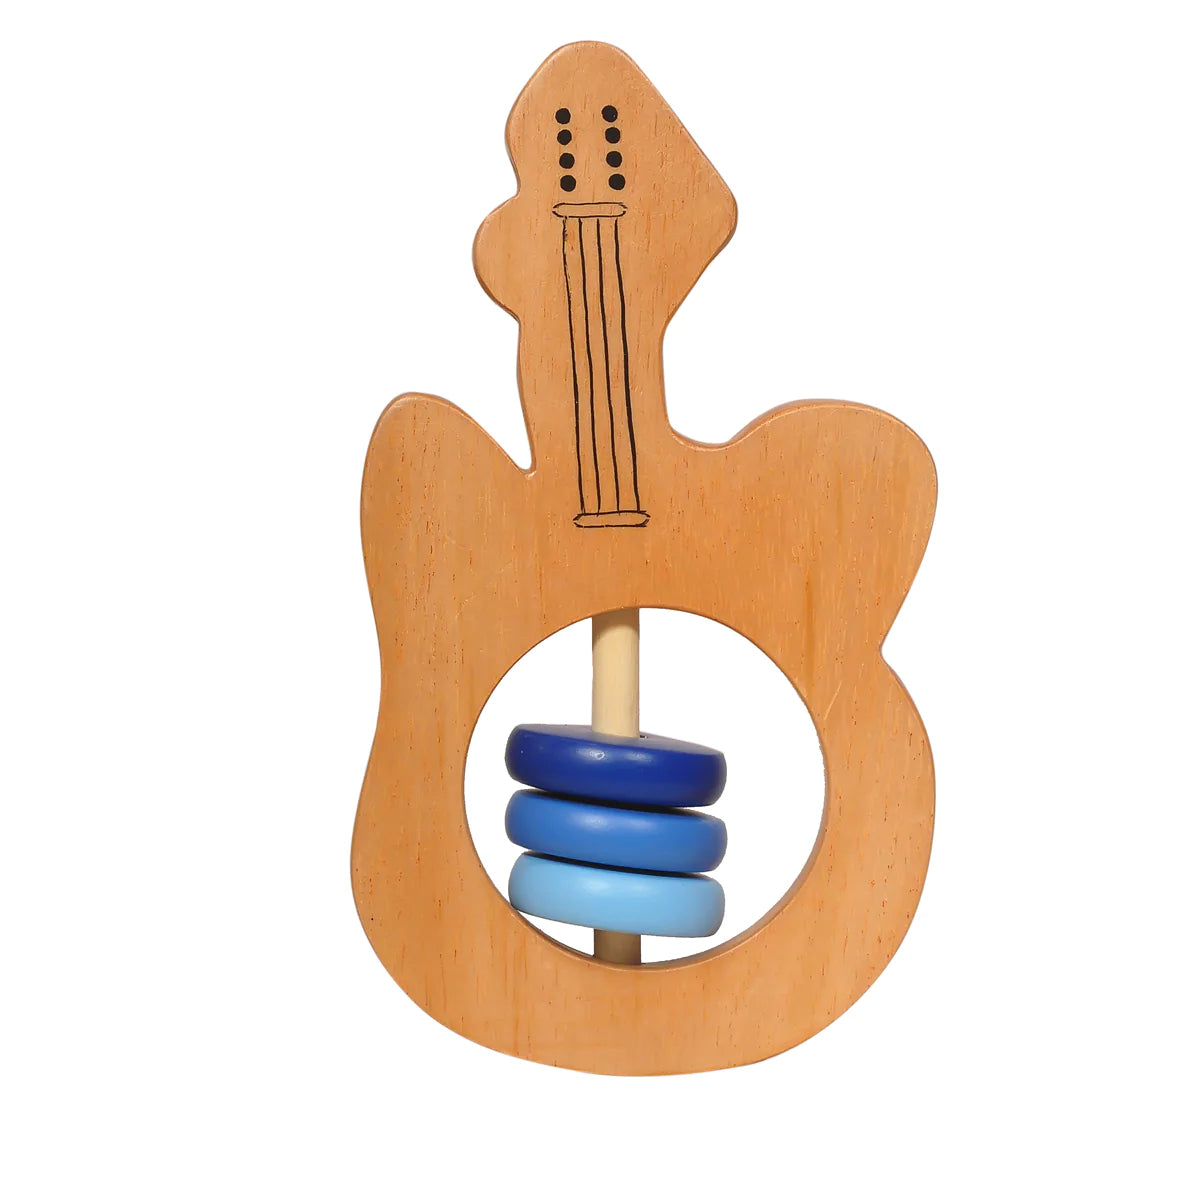 Buy Thasvi Wooden Guitar Rattle Toy - SkilloToys.com